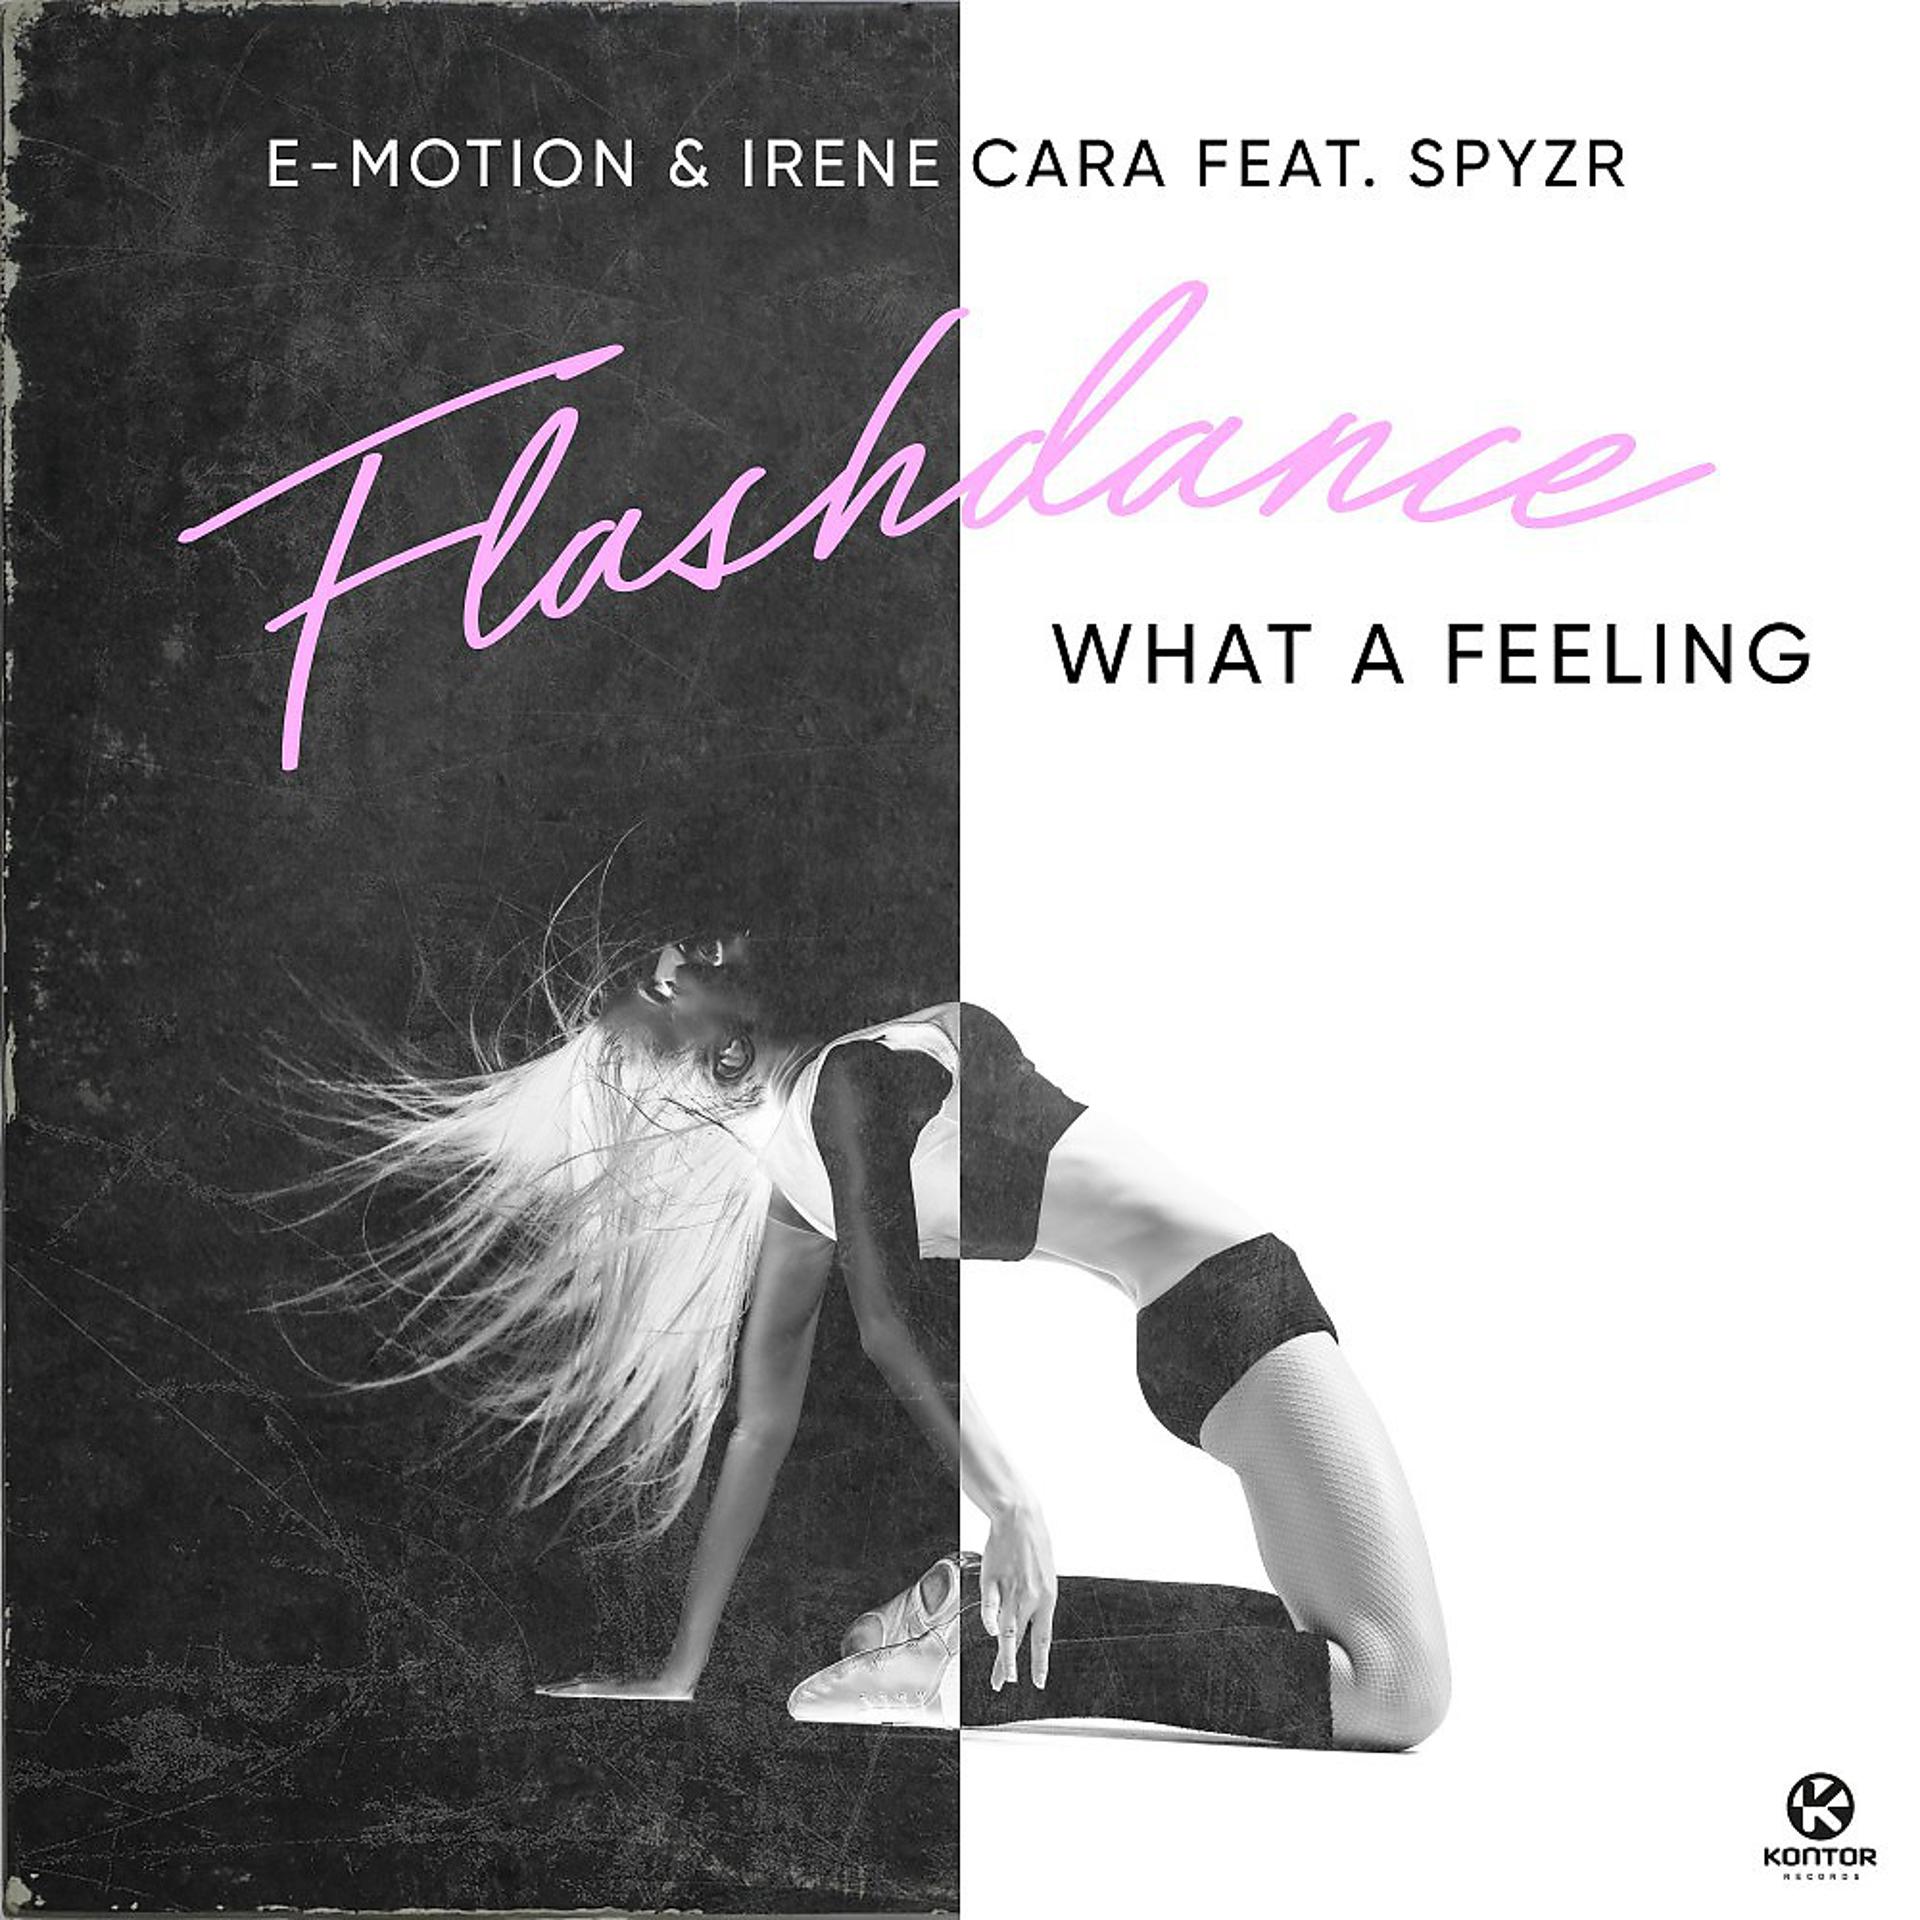 What a feeling. Irene cara what a feeling. Flashdance what a feeling